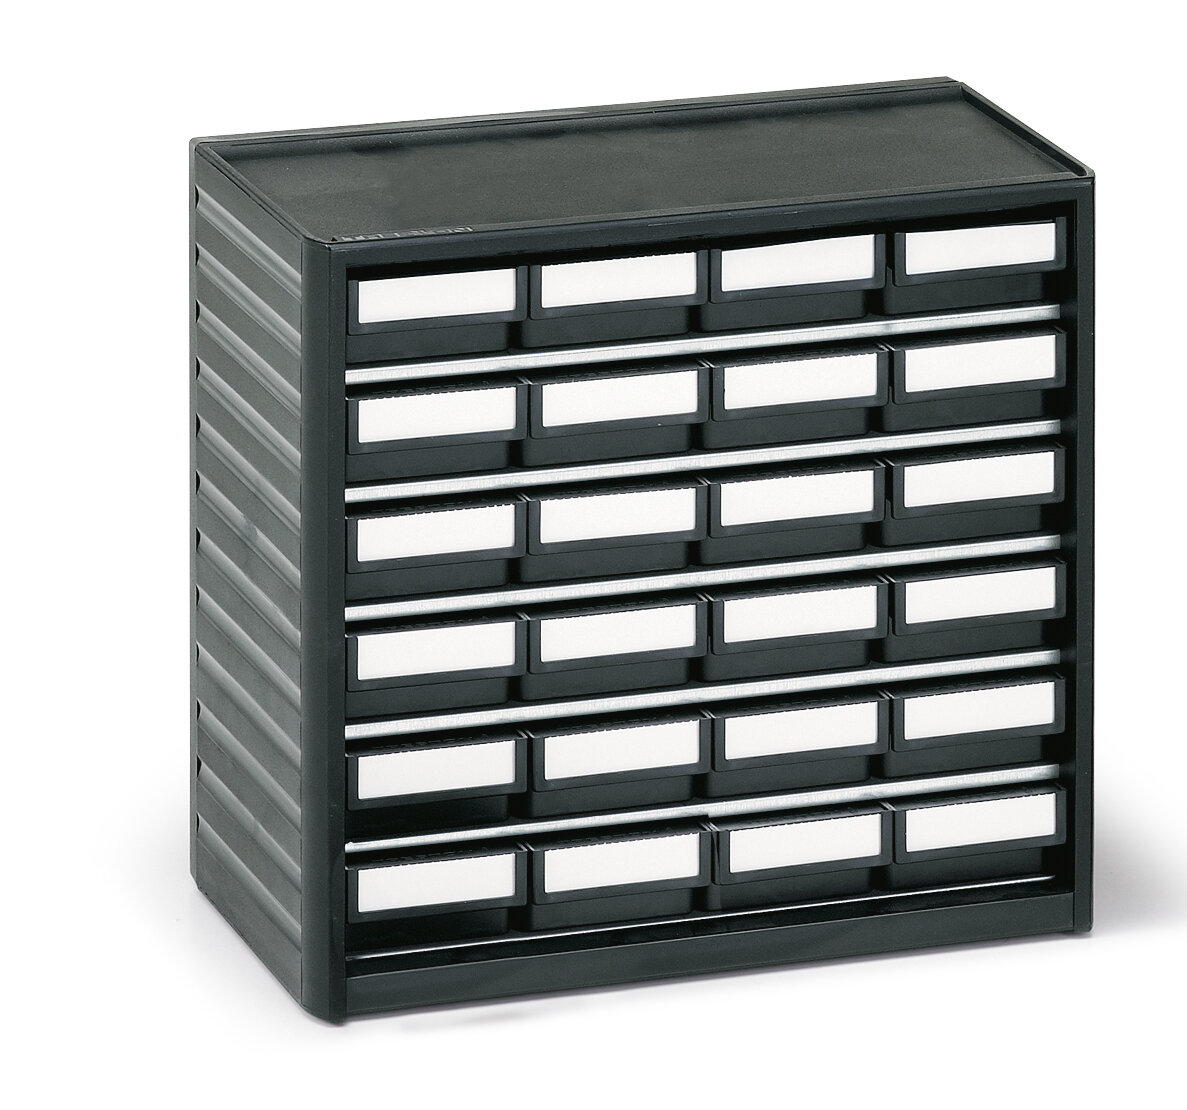 Treston Extra Deep Steel-Framed Storage Cabinets and Polypropylene Bins